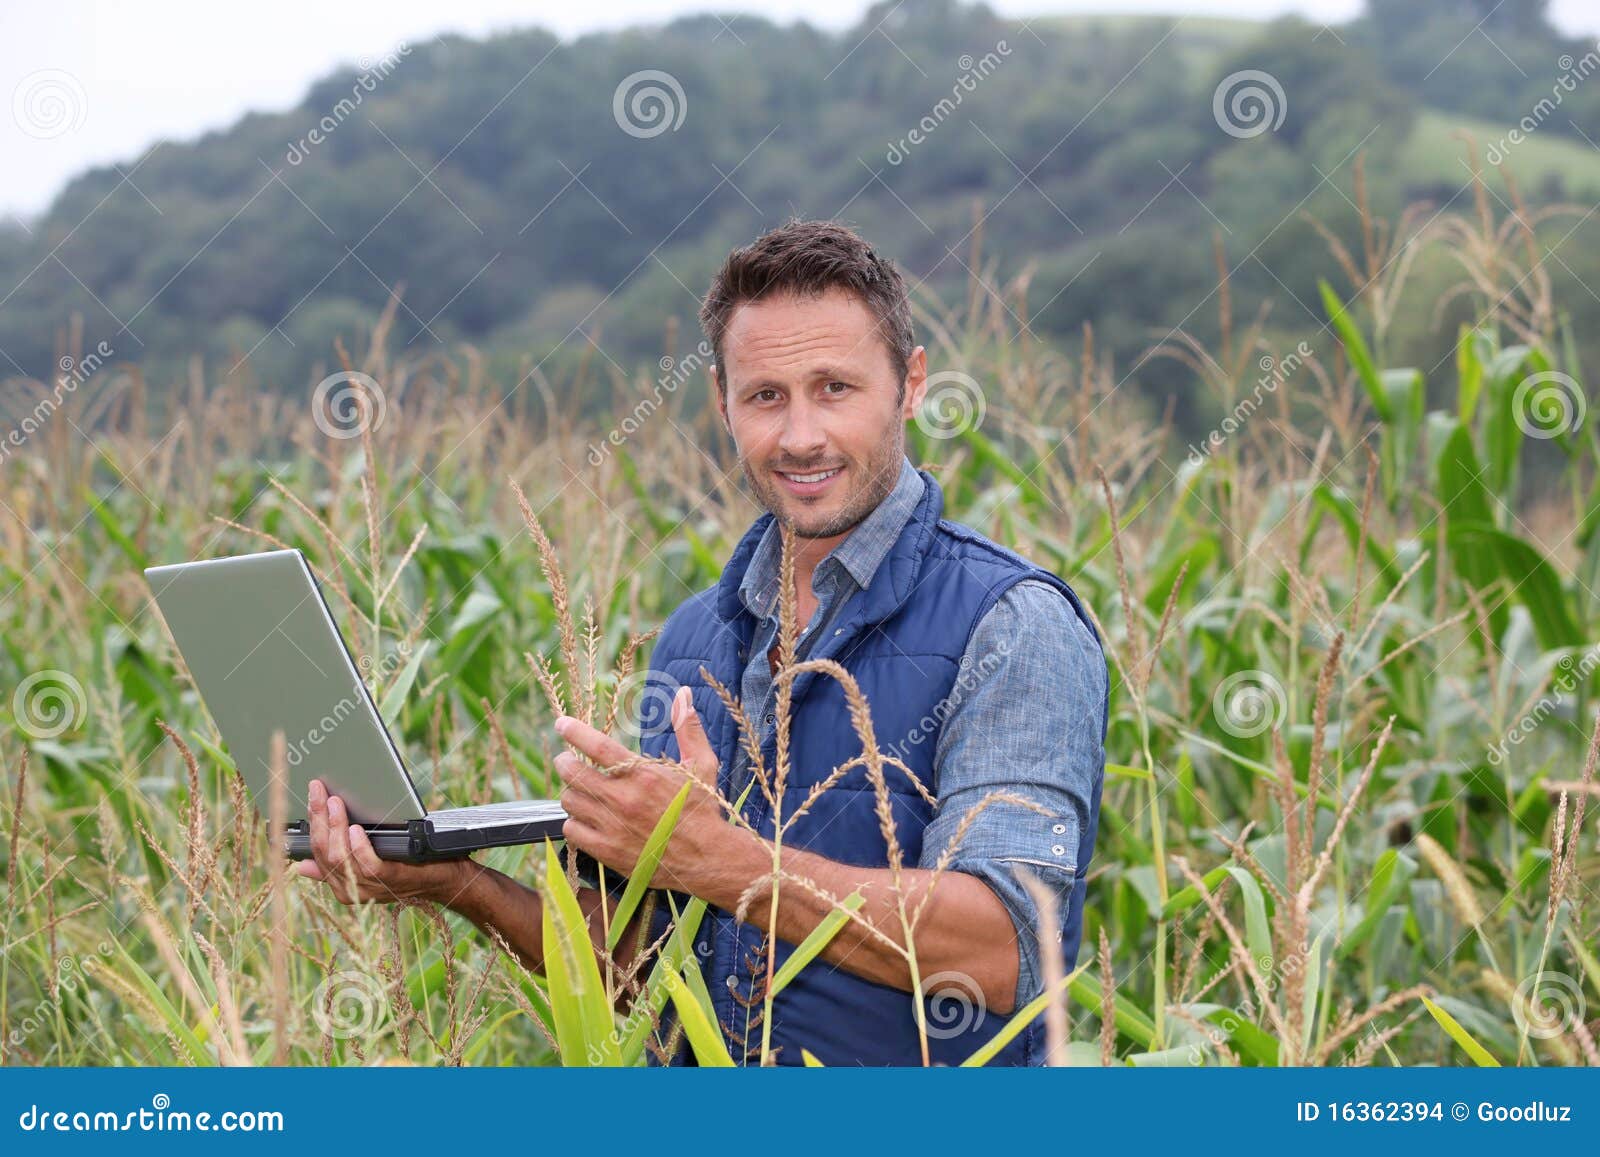 portrait of agronomist